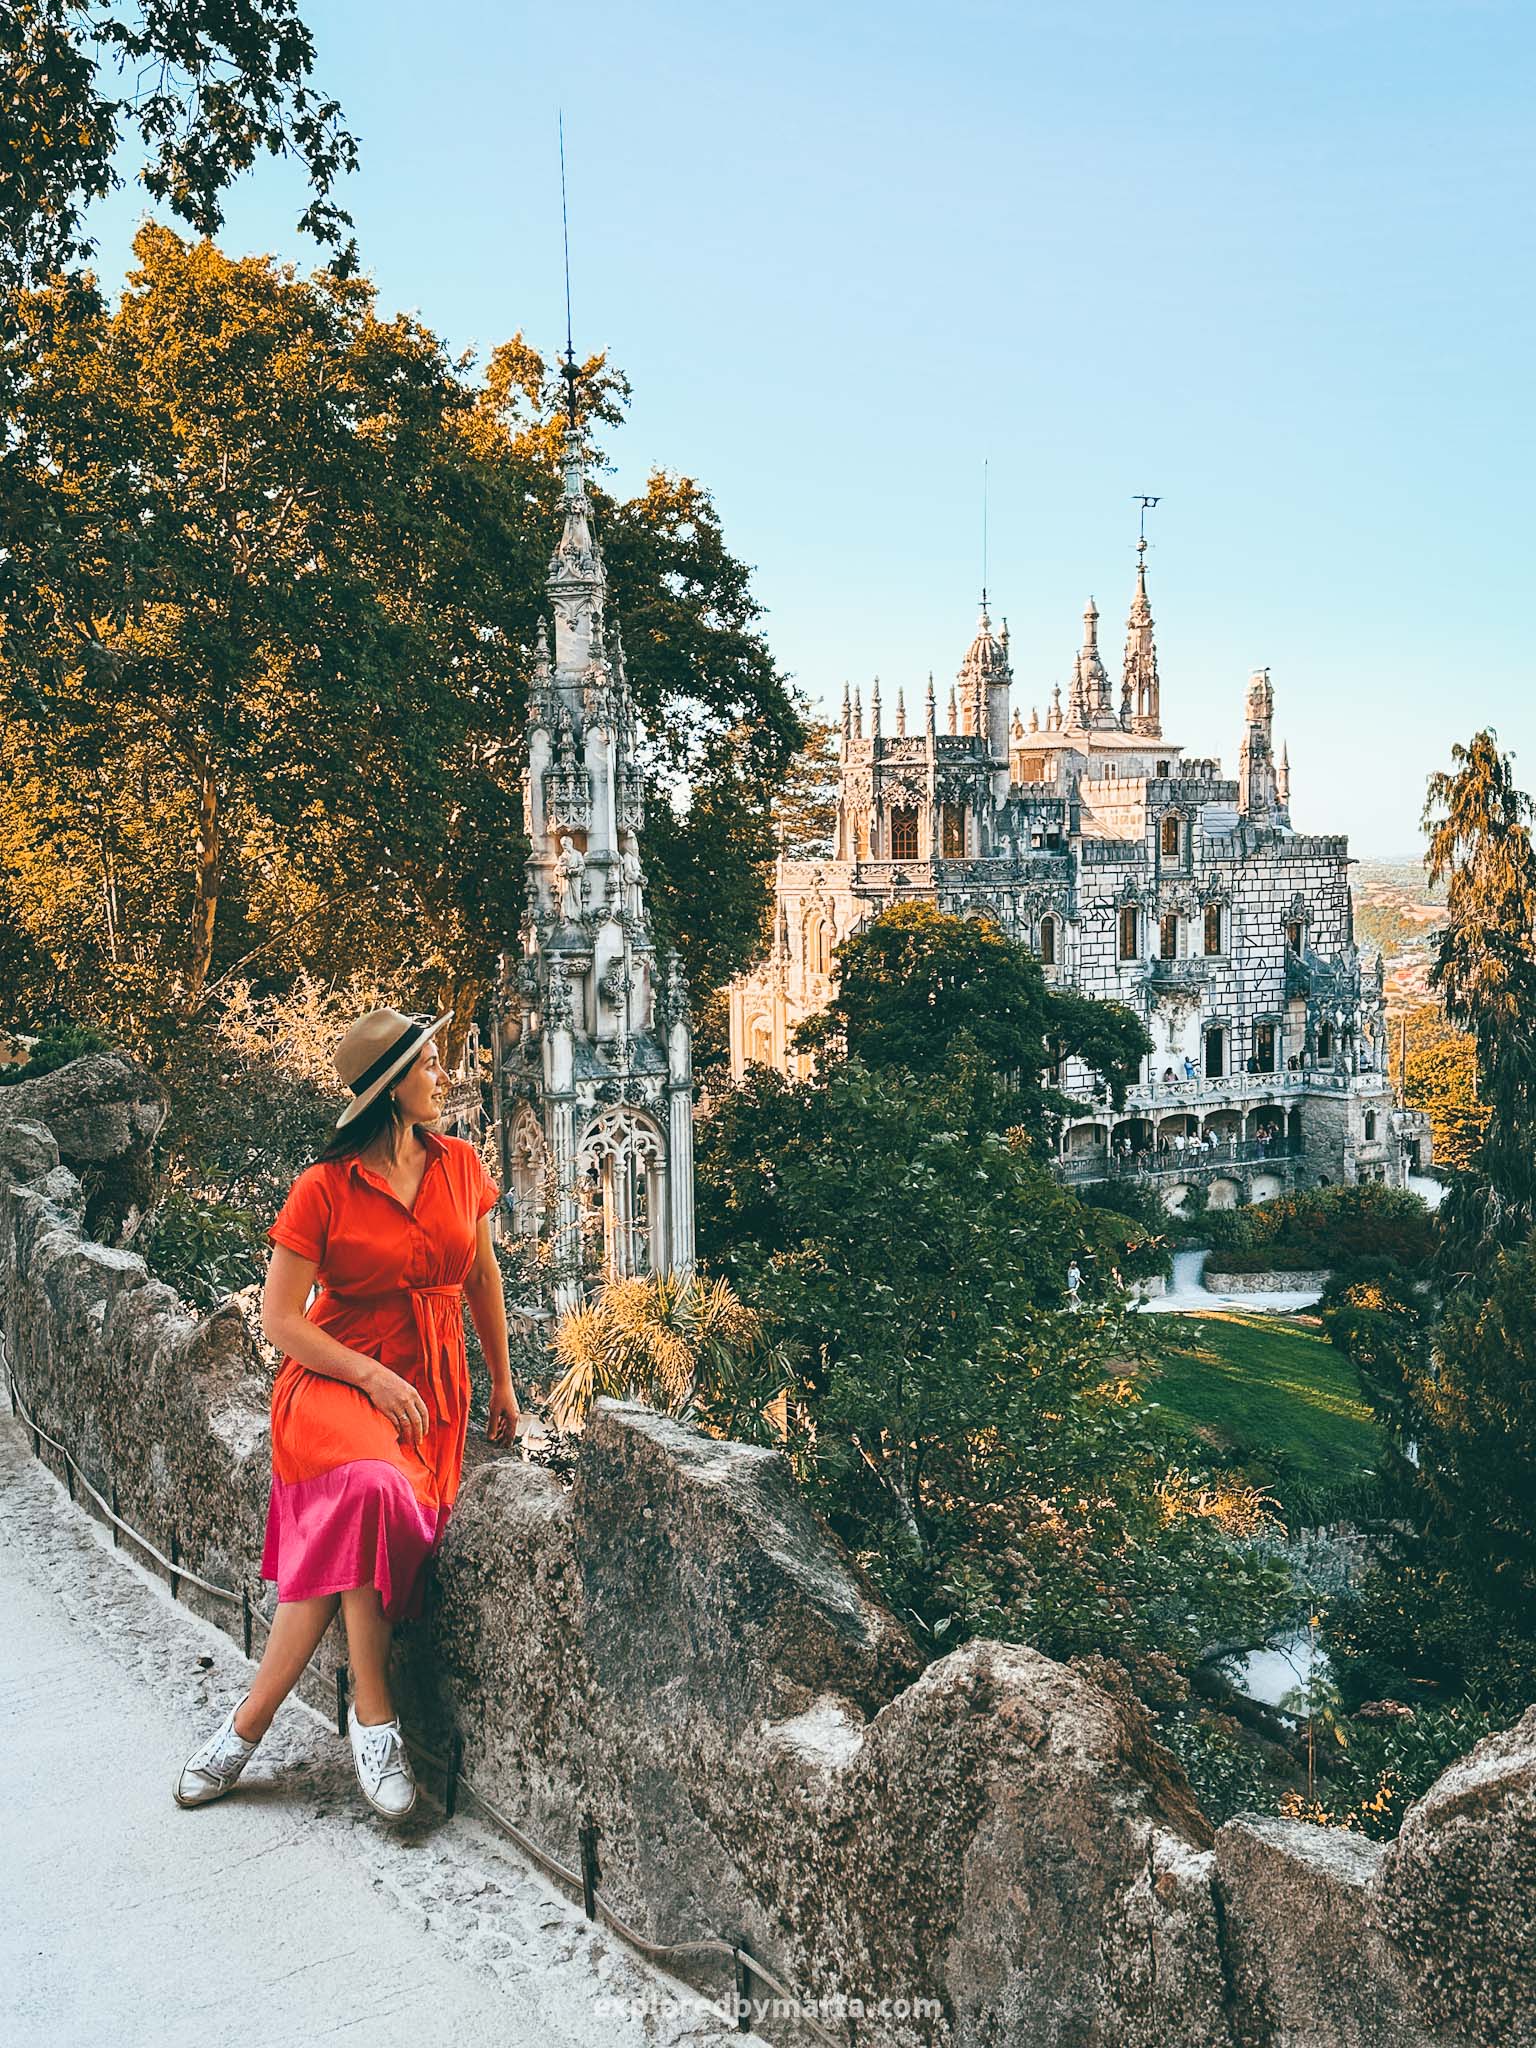 Sintra, Portugal-Quinta da Regaleira palace in Sintra-Best Instagram spots in Sintra